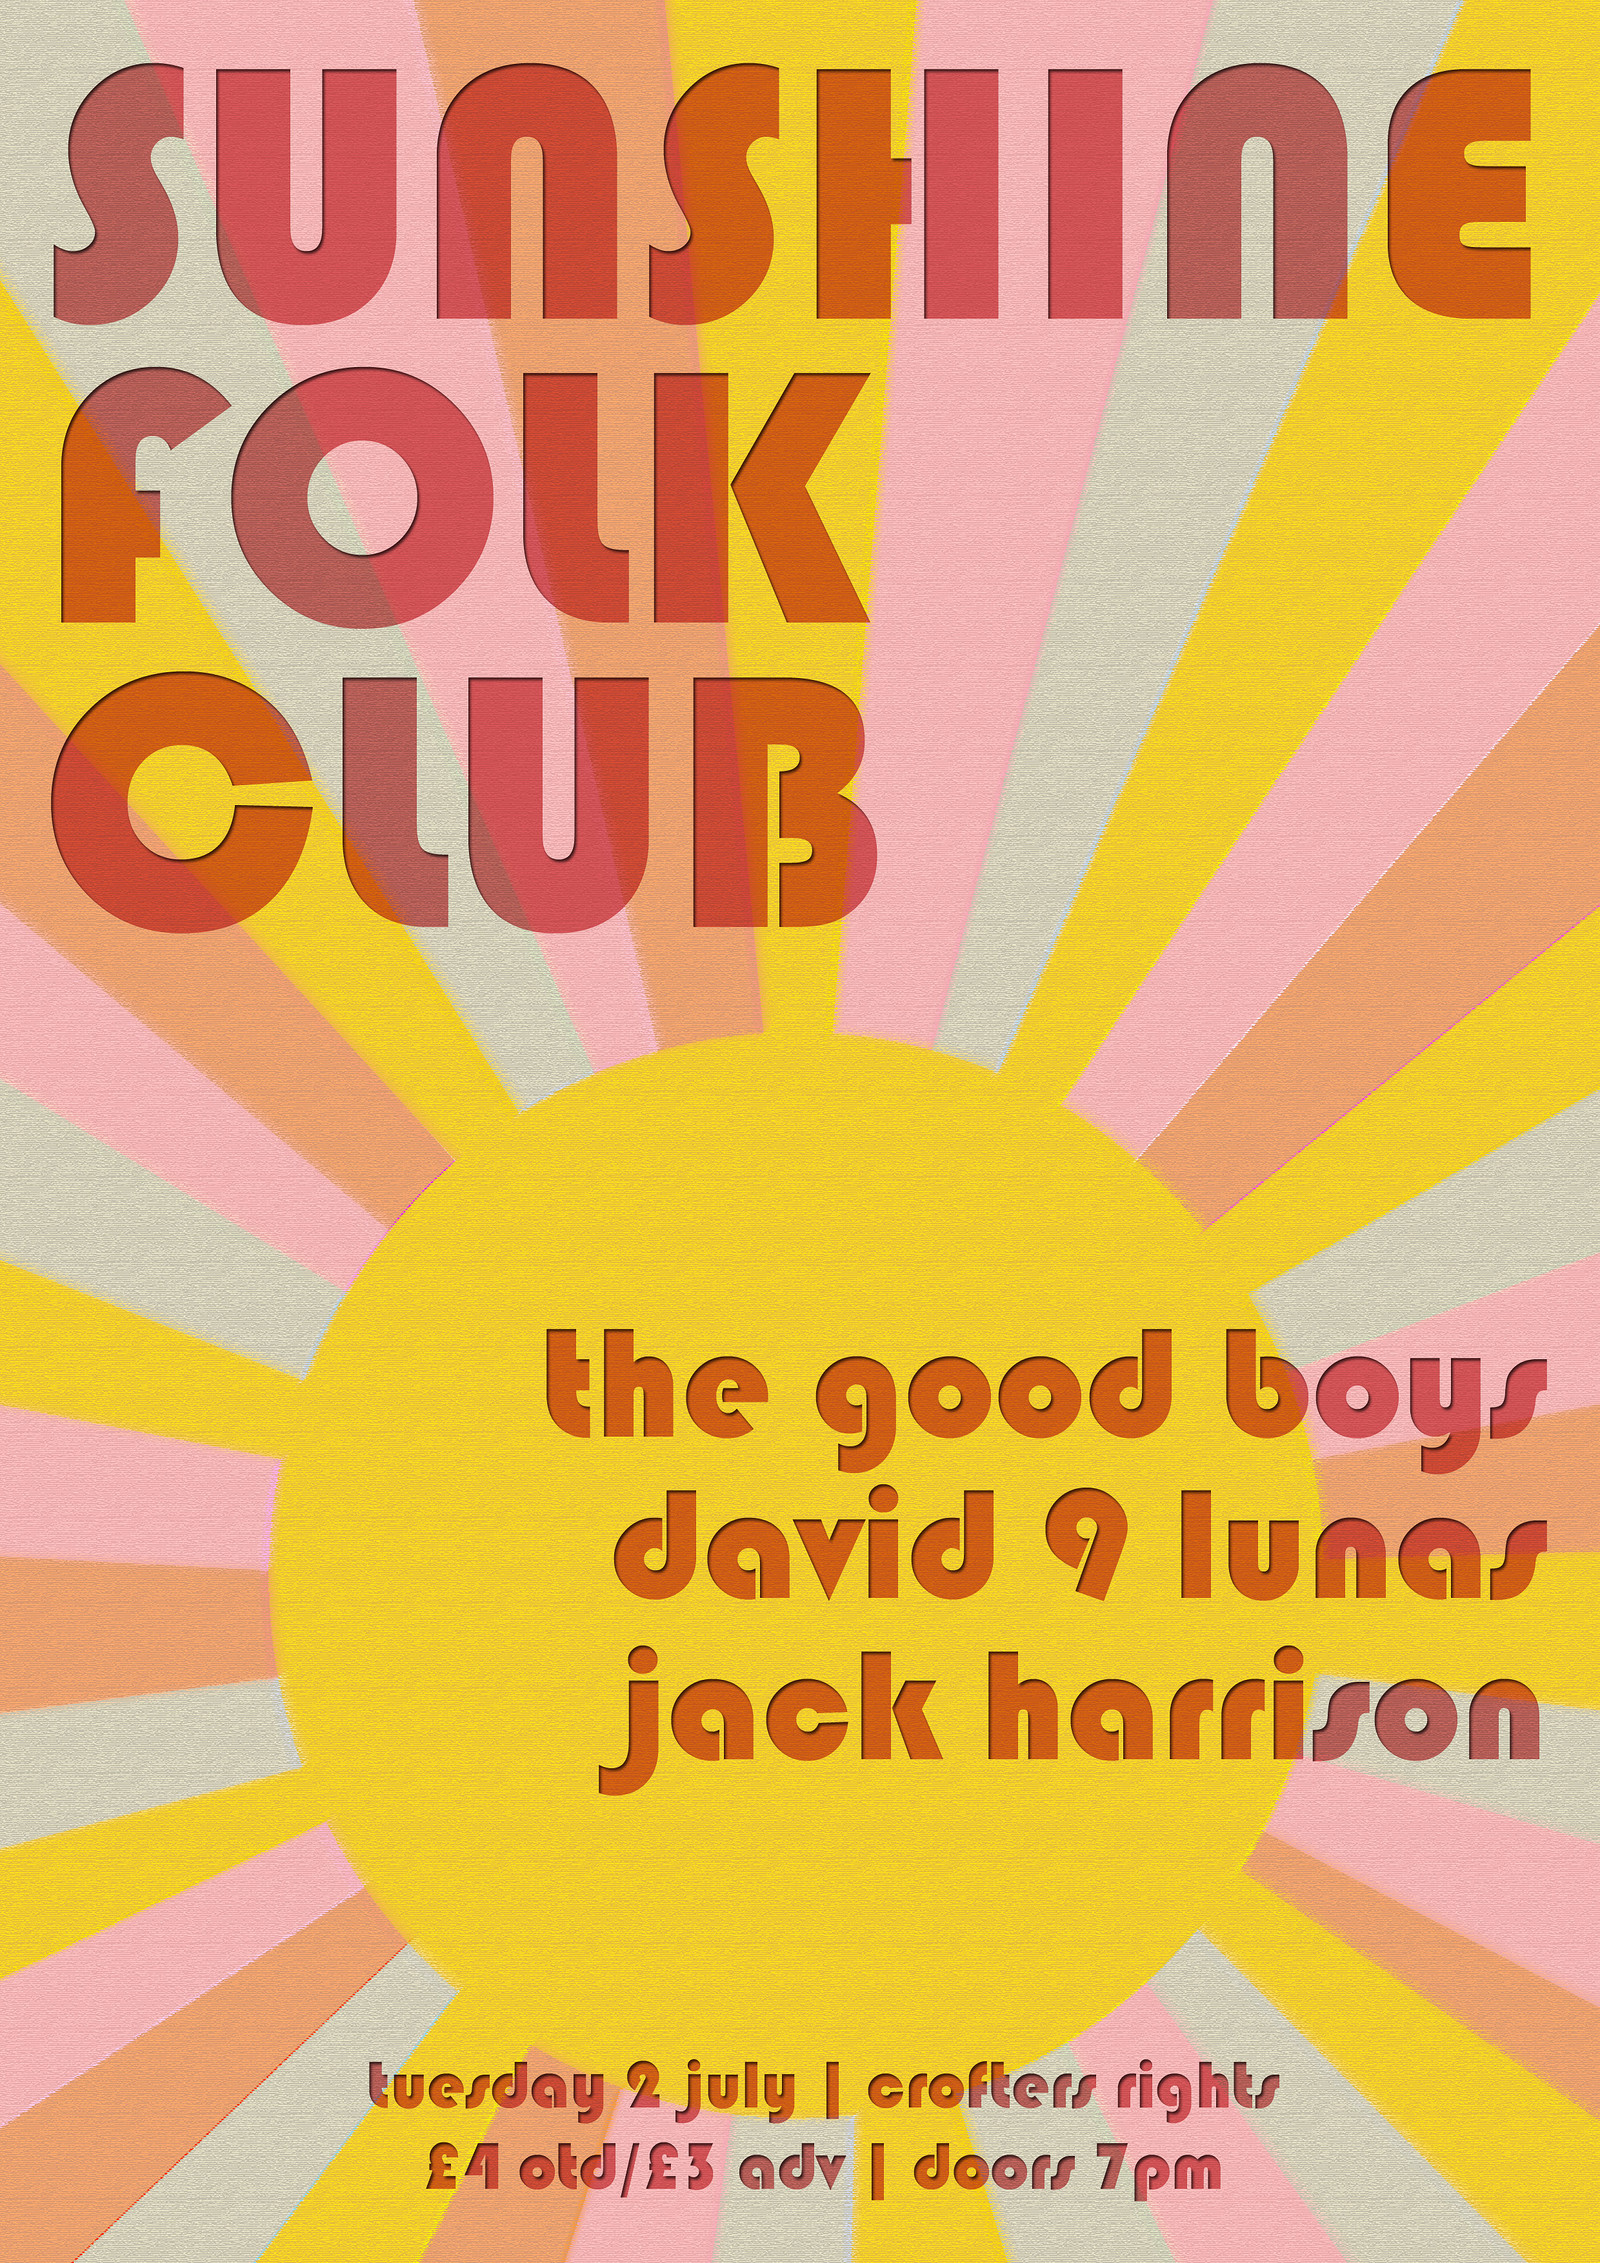 The Good Boys / David 9 Lunas / Jack Harrison at Crofters Rights